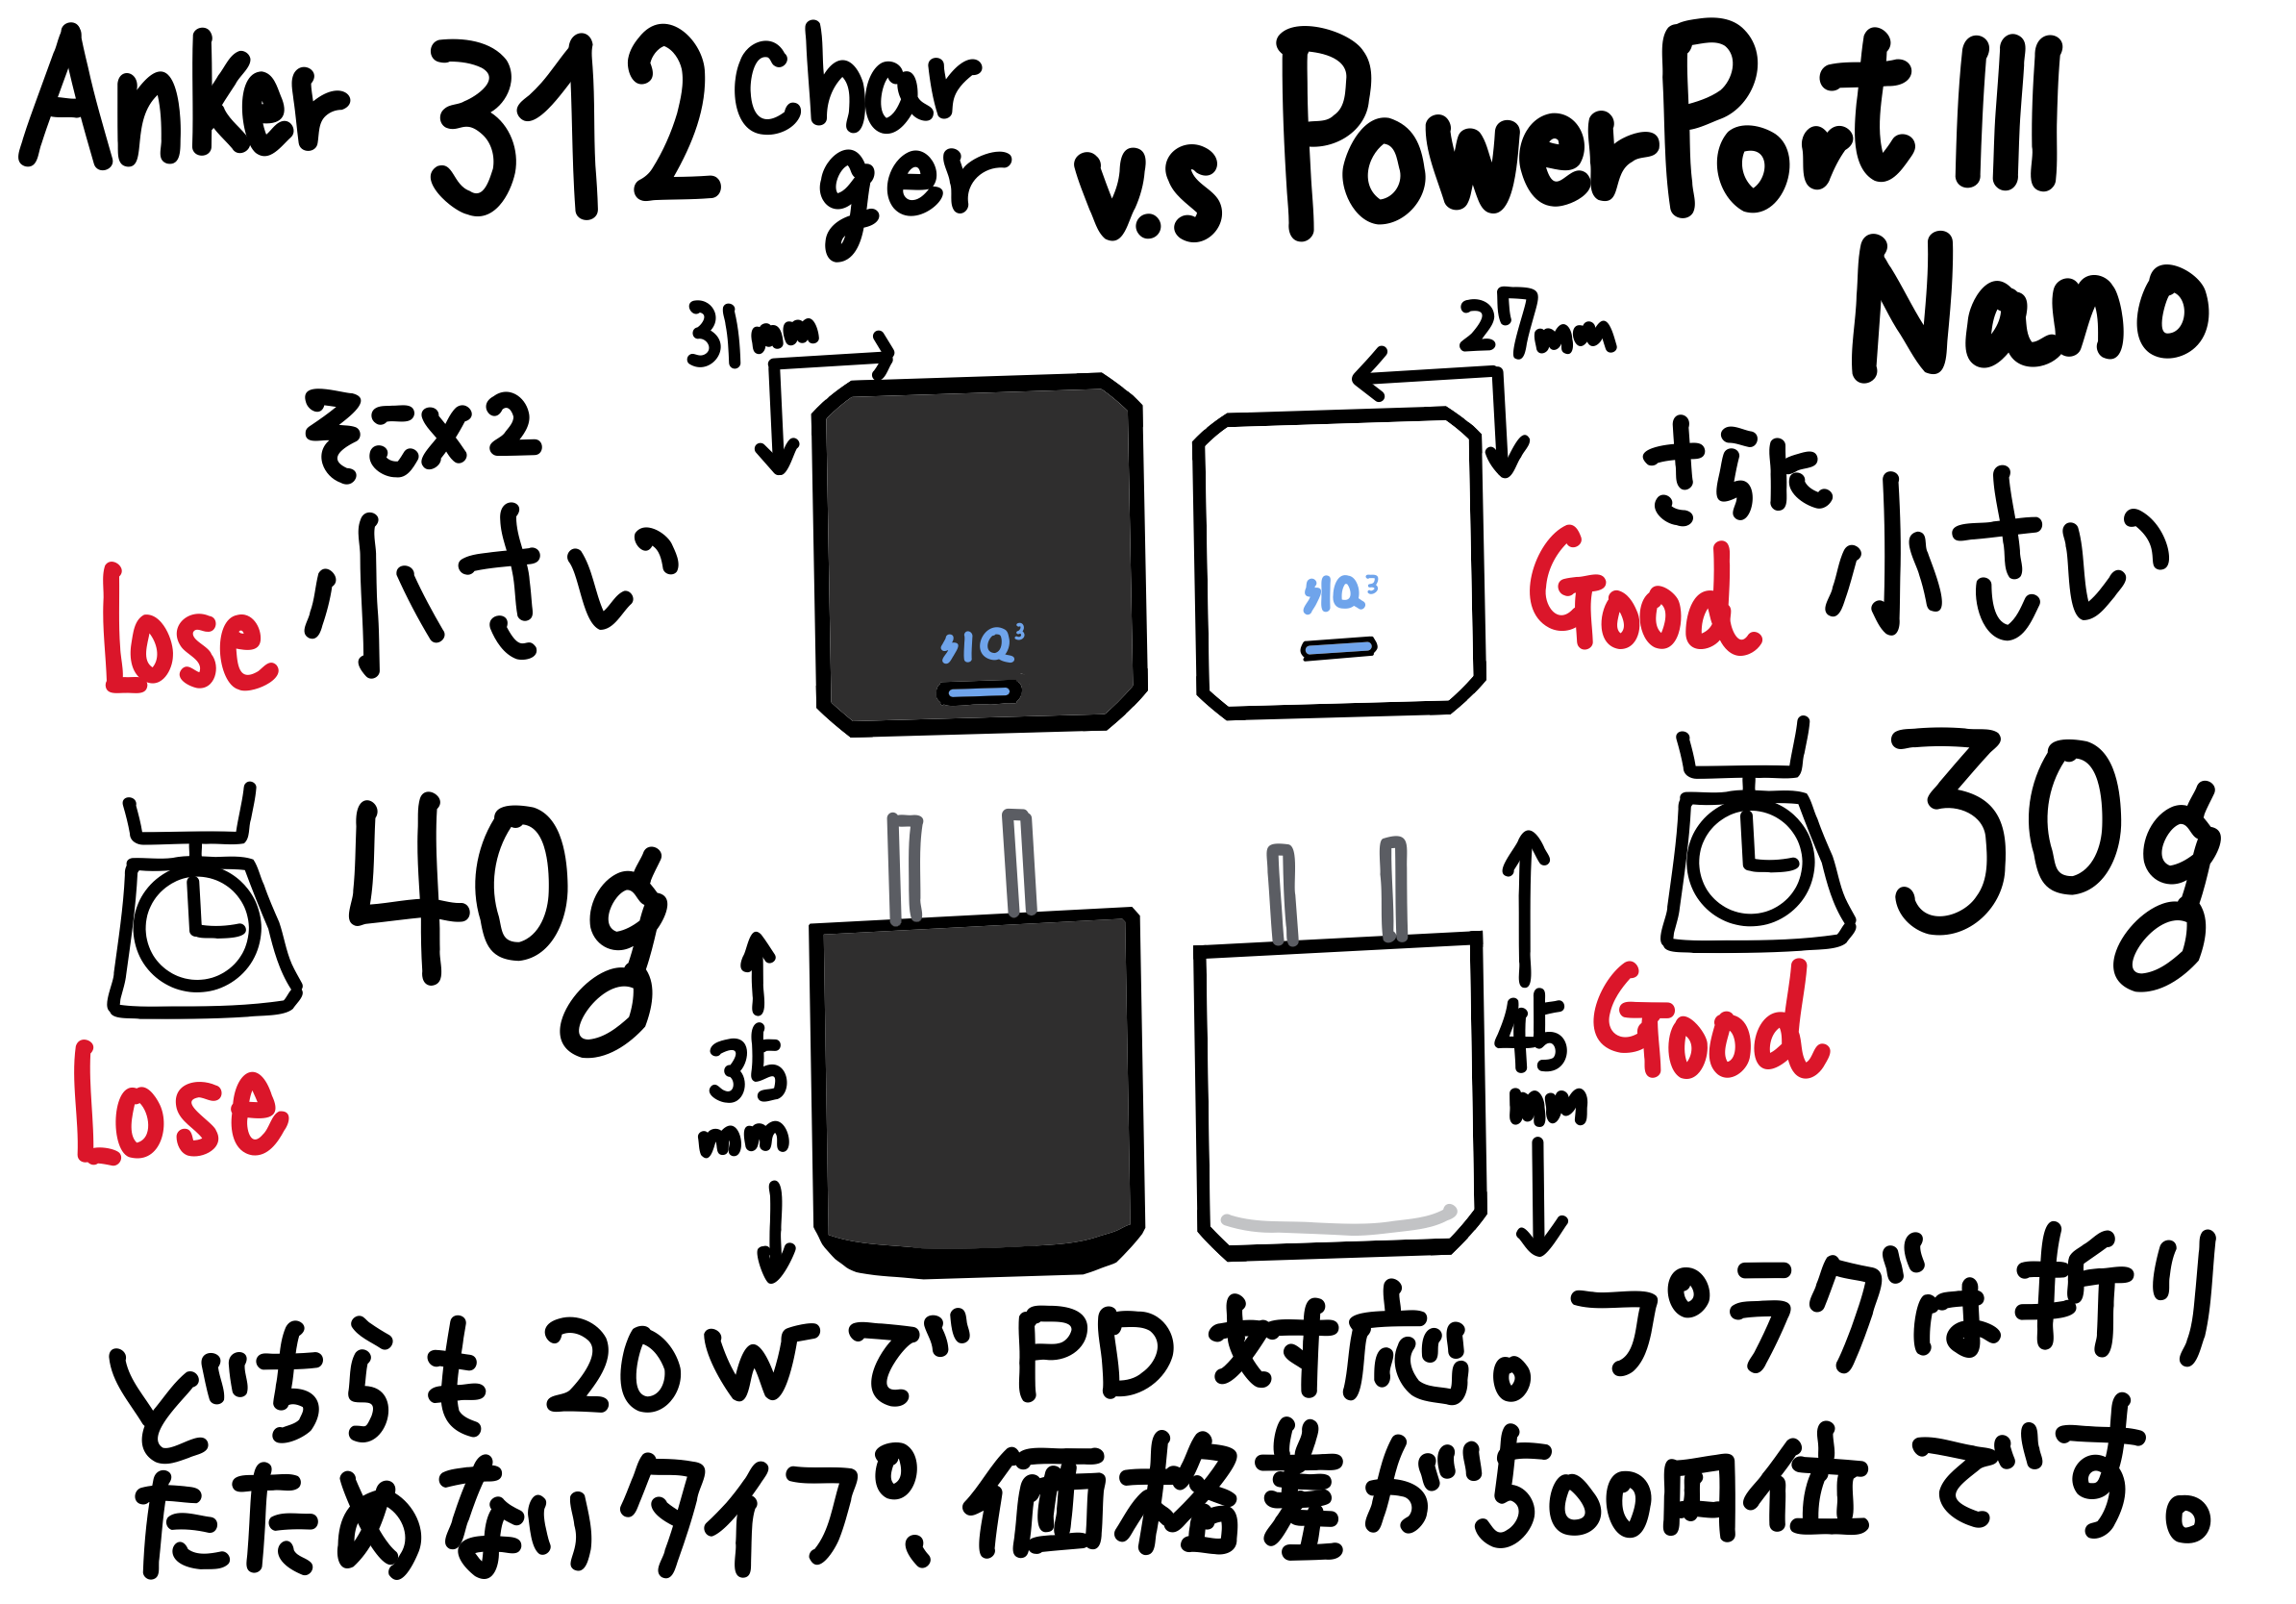 ANKER 312 Charger は PowerPort III Nano より一回り大きく 10g 重い 価格差は 500円くらい